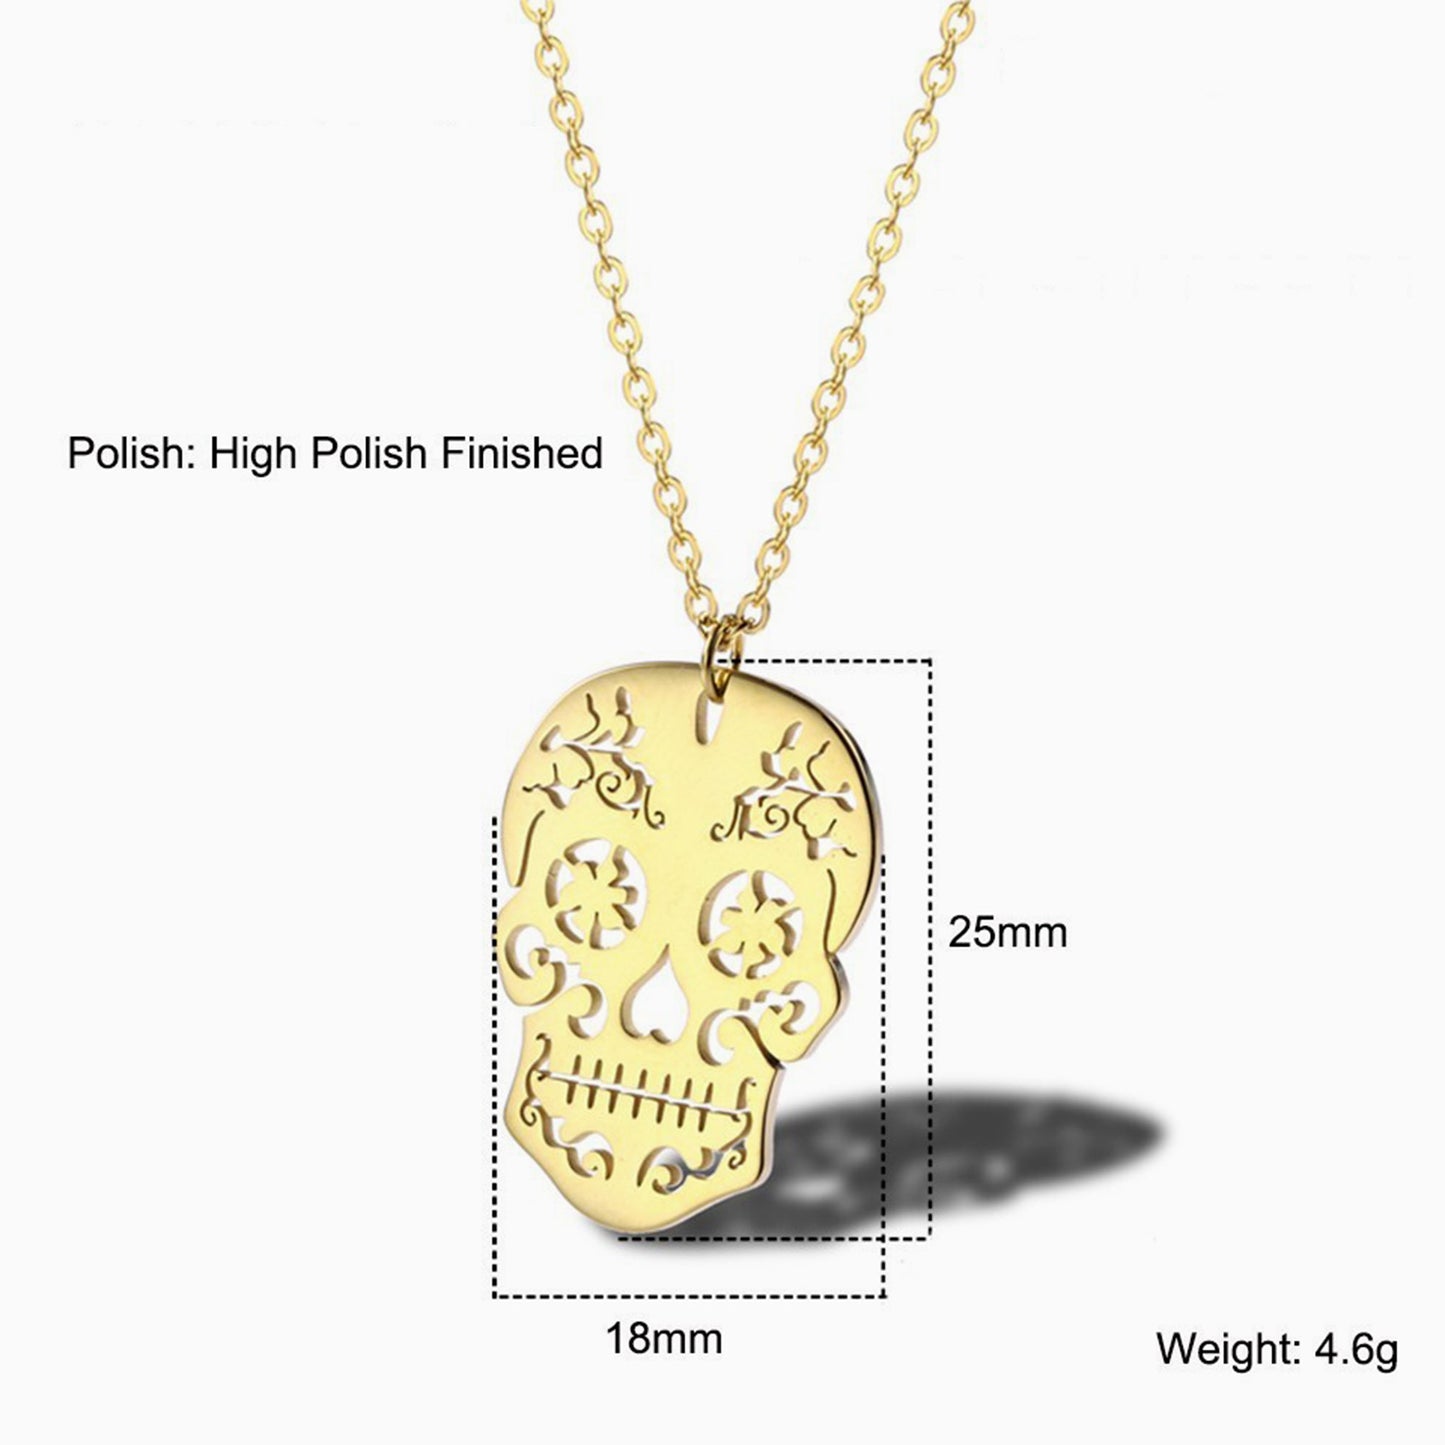 Sugar skull necklace and pendant. Mexican silver, gold or rose gold metallic skeleton jewelry. Collar de calavera de azucar. Mexico folk art. Hollow style. Latinx culture accessories by Fridamaniacs